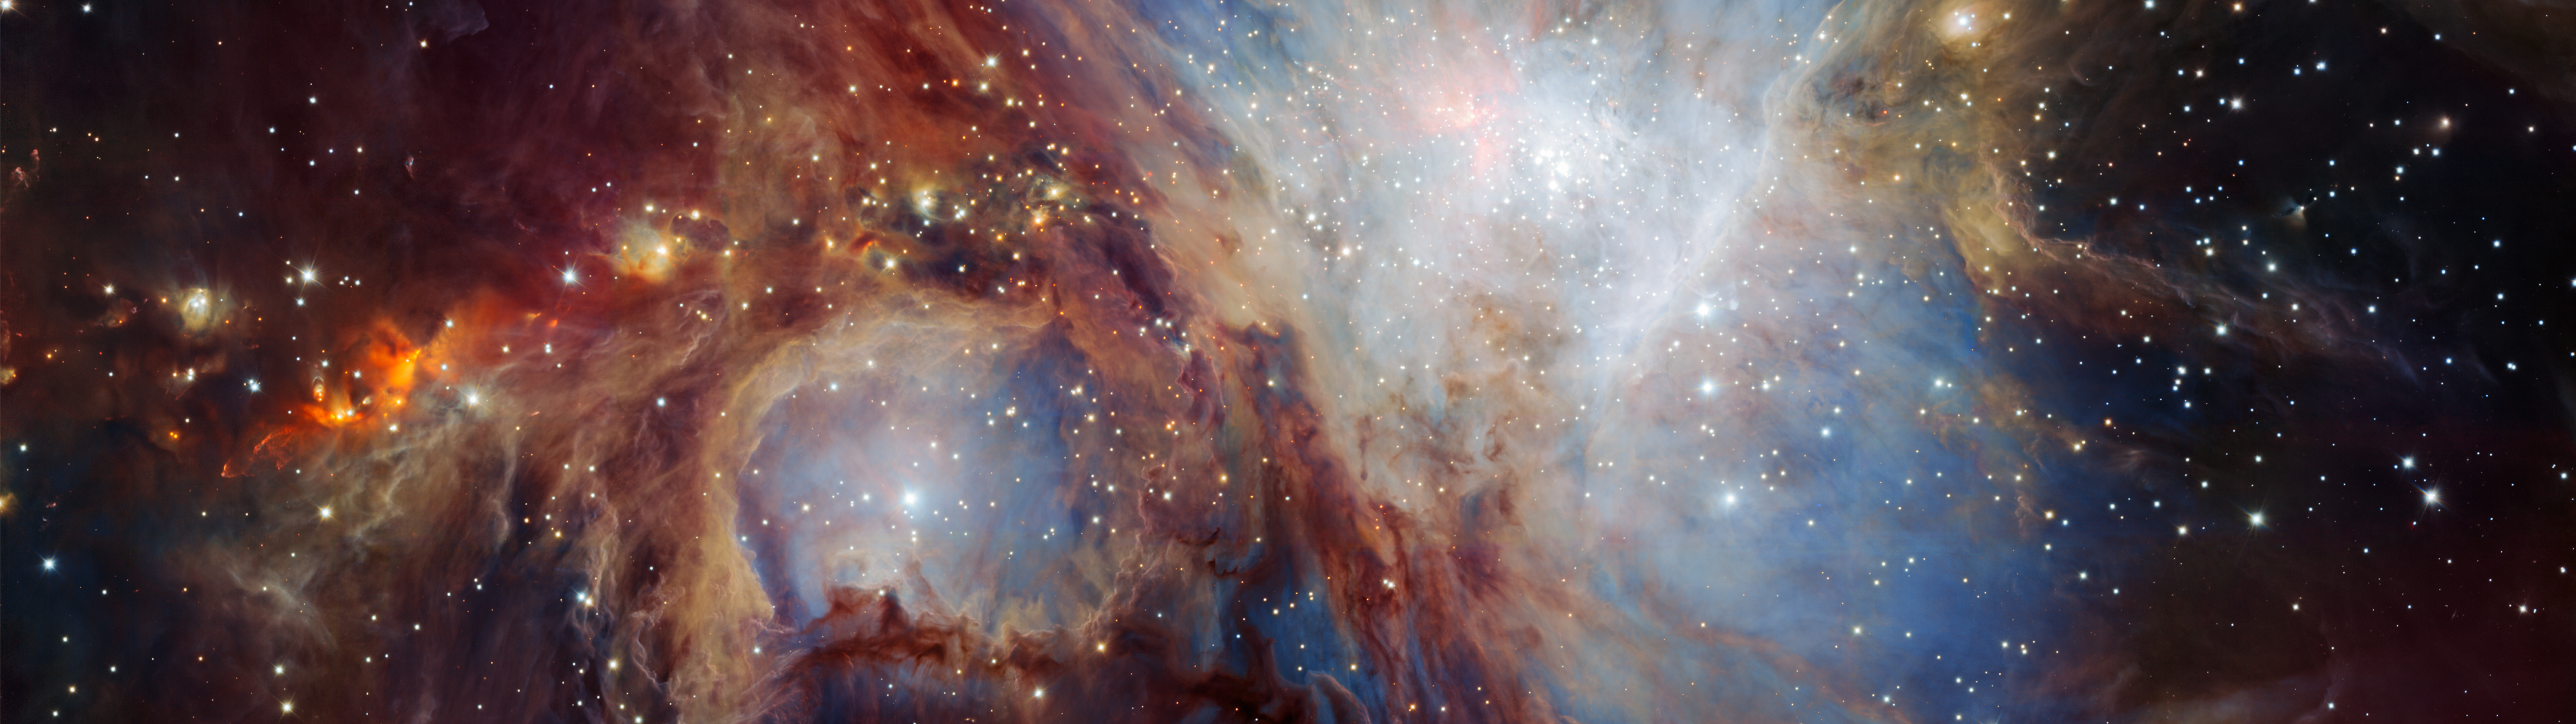 General 3840x1080 nebula Orion space space art digital art astronomy